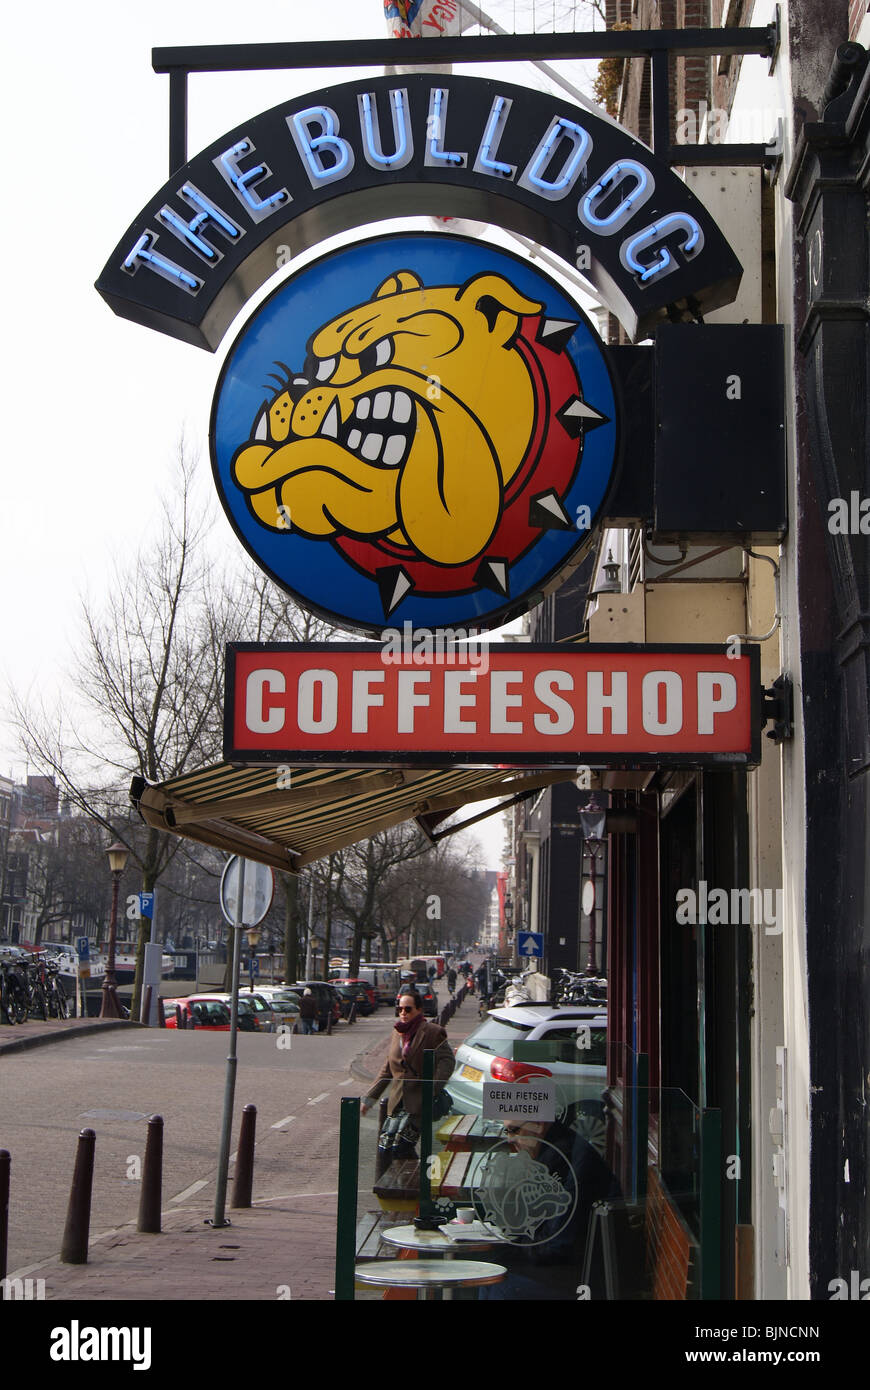 the bulldog coffeeshop amsterdam Stock Photo